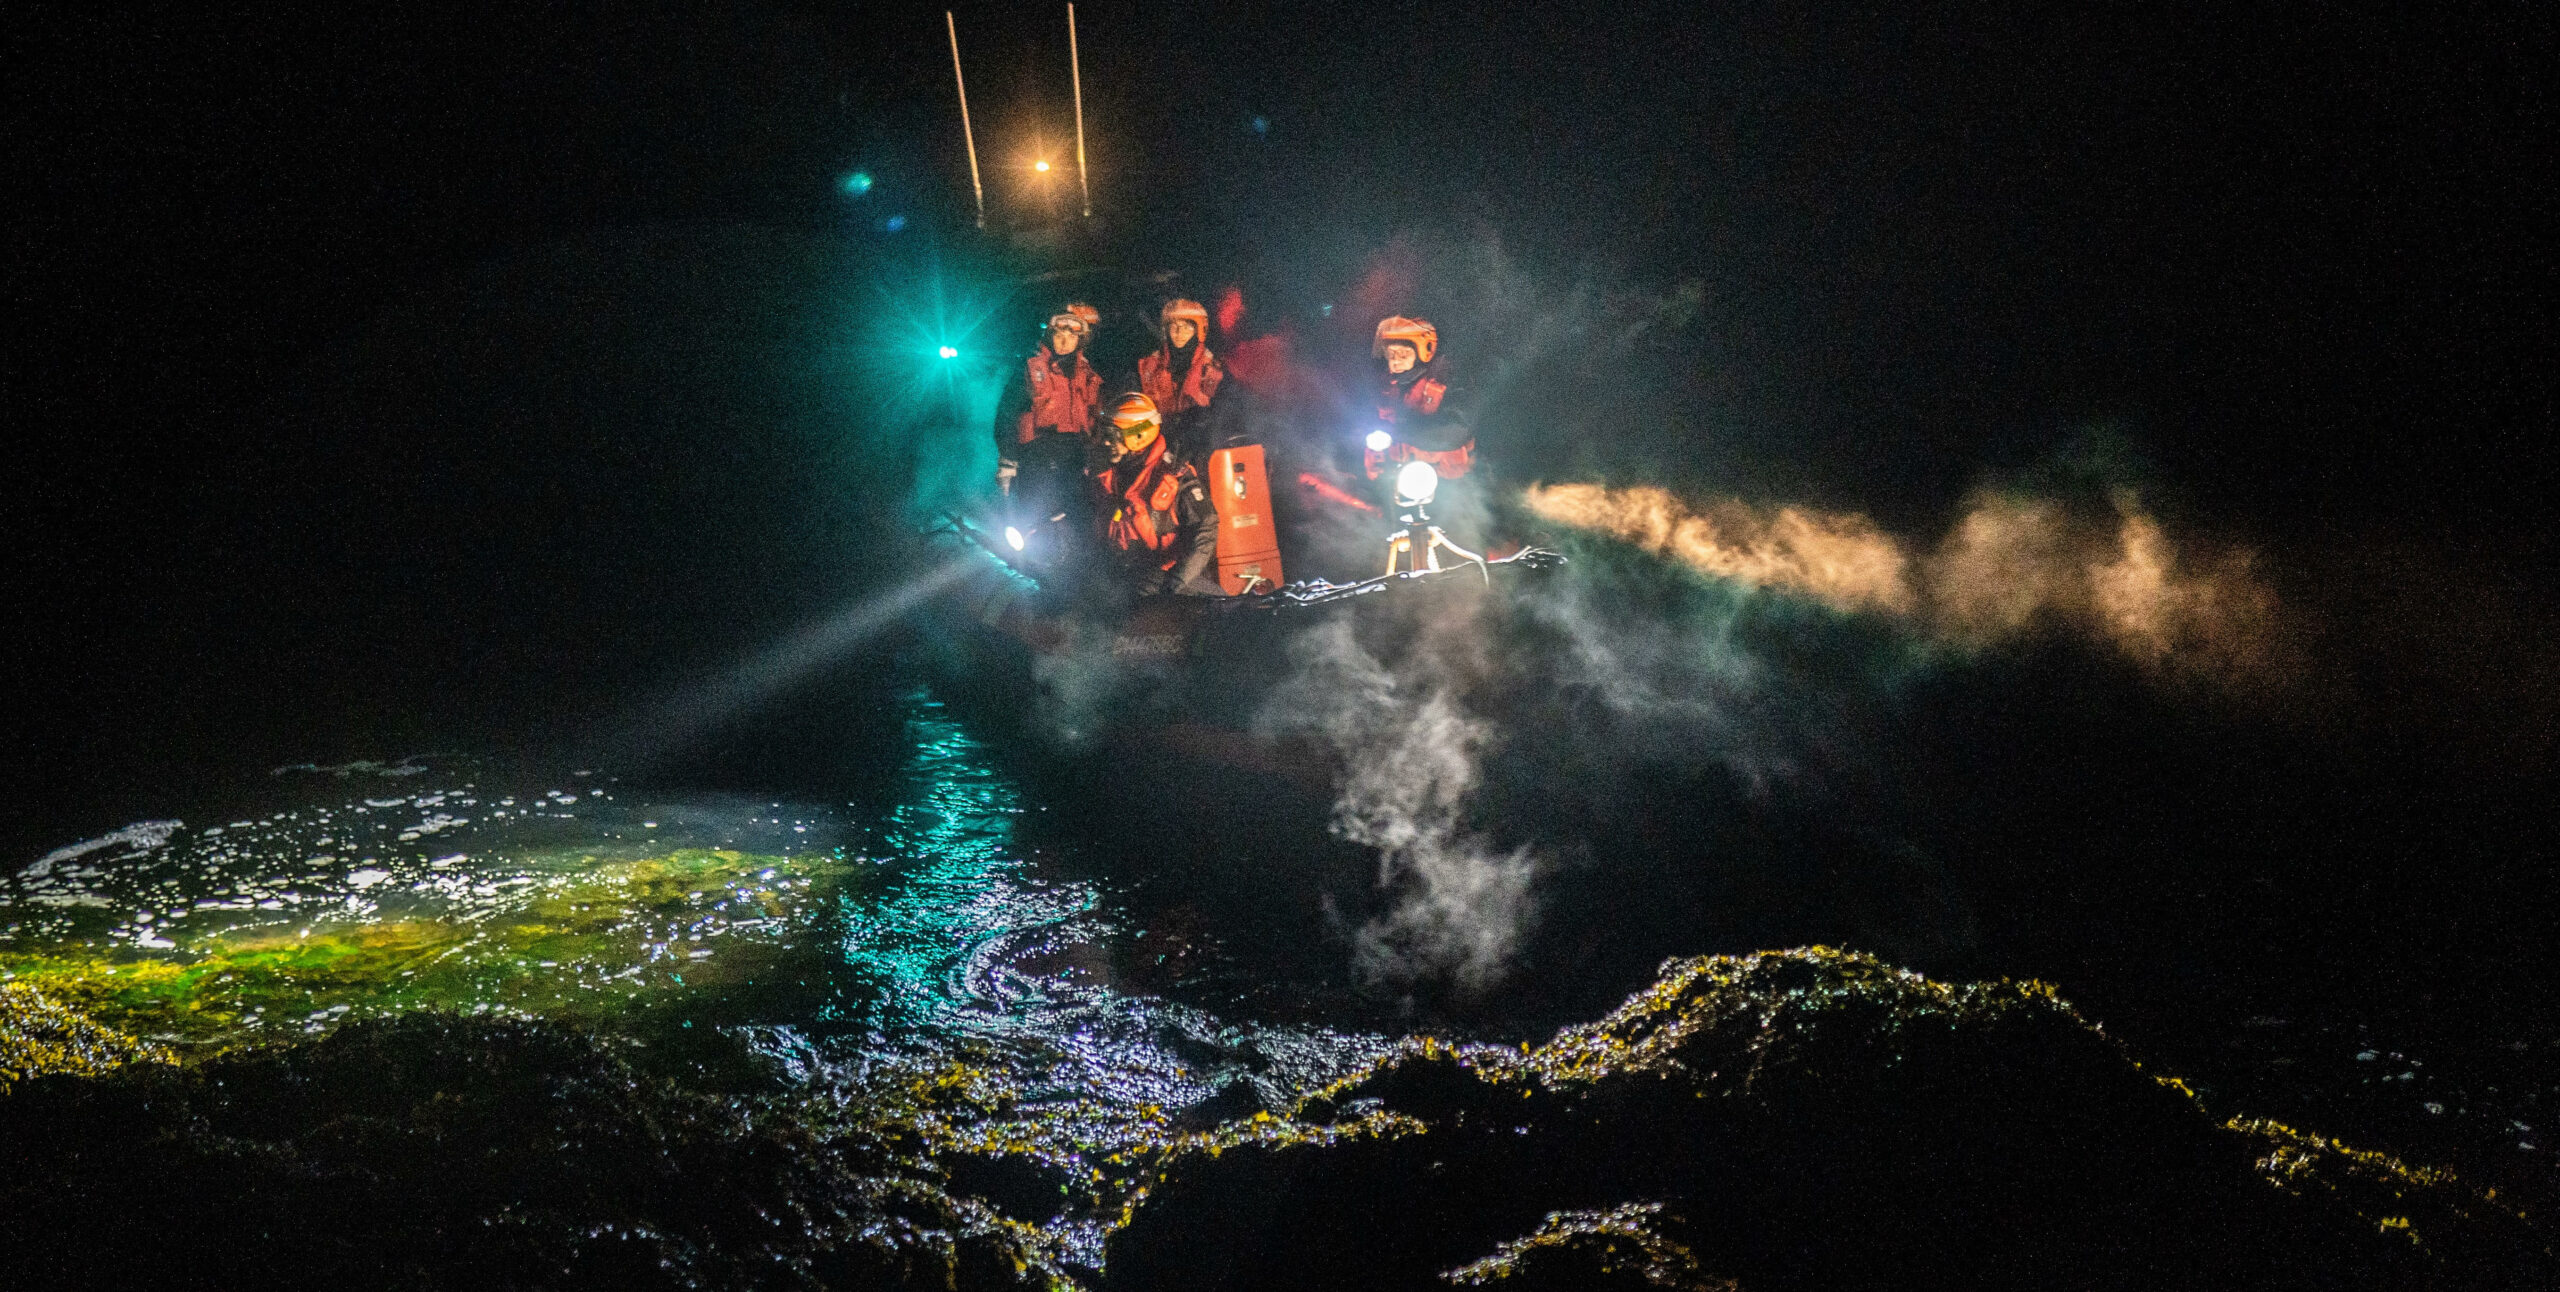 Students conducting a shore crawl search at night.